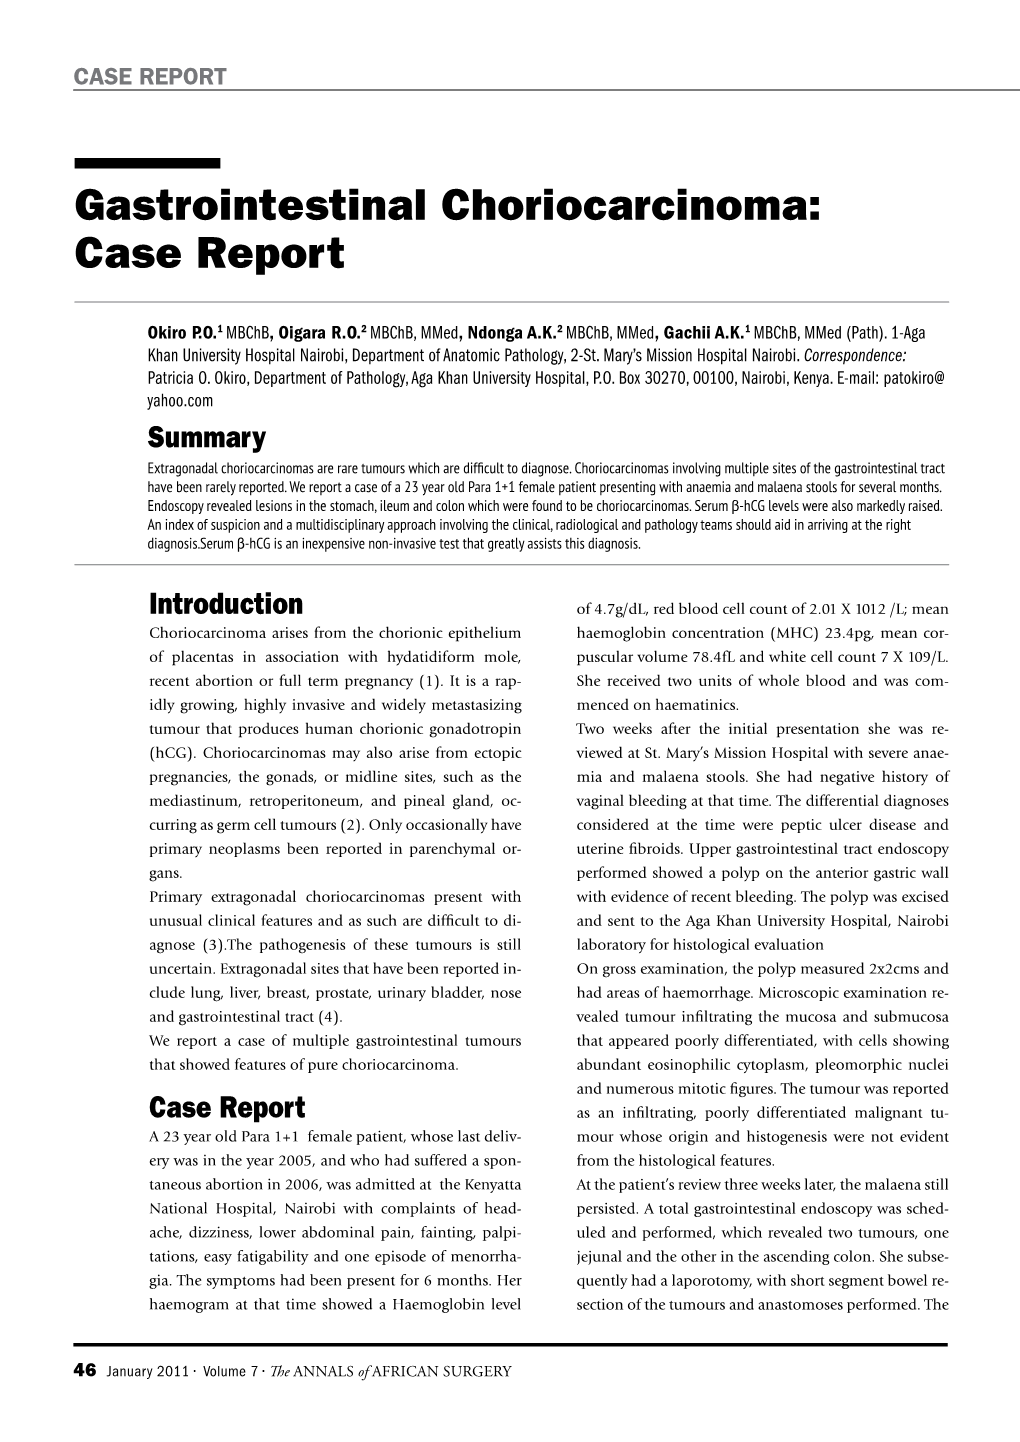 Gastrointestinal Choriocarcinoma: Case Report